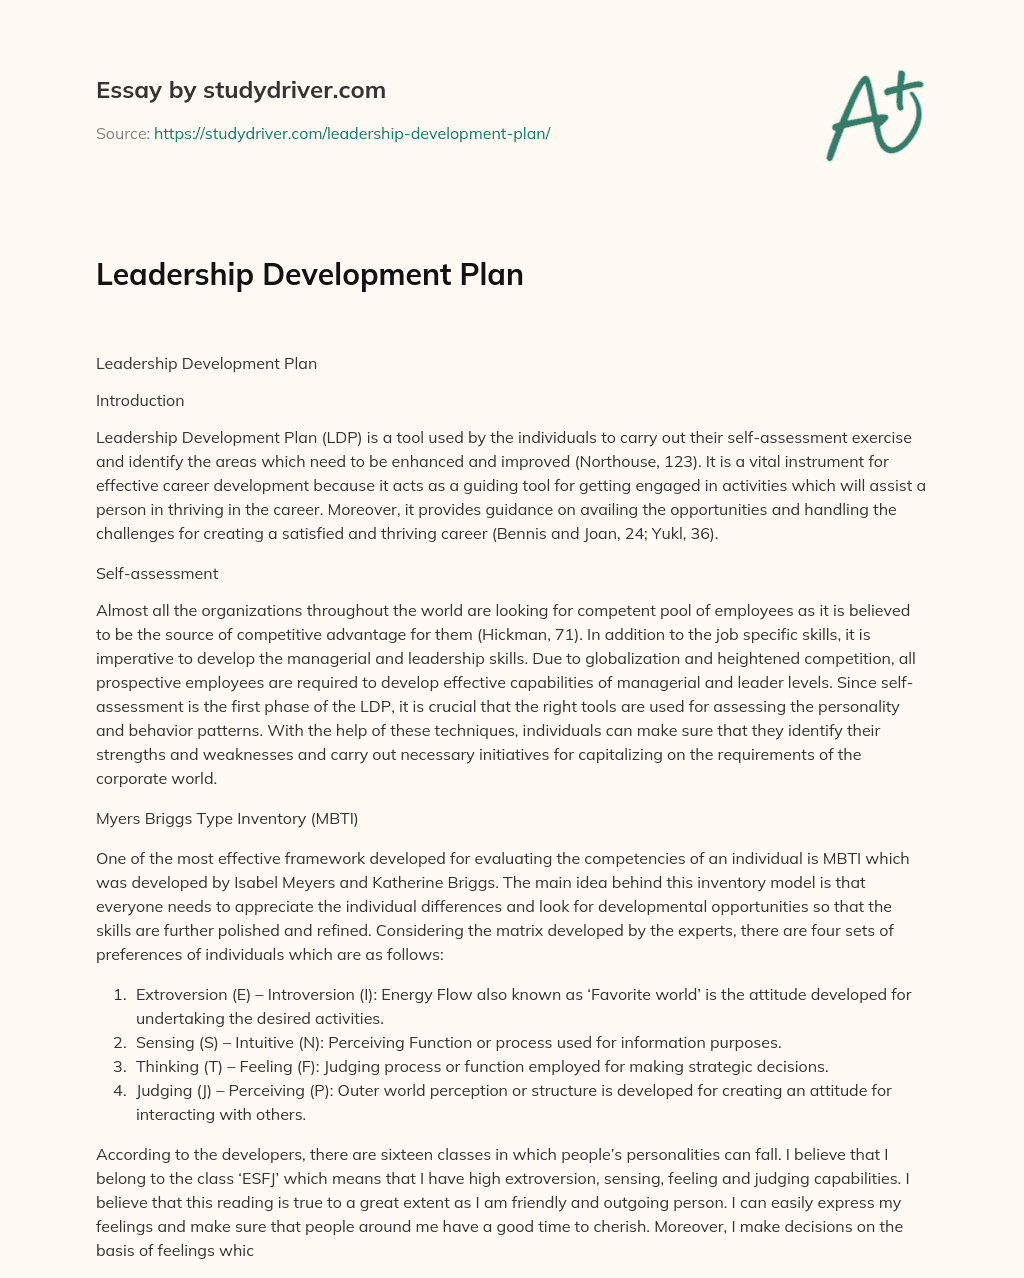 Leadership Development Plan essay